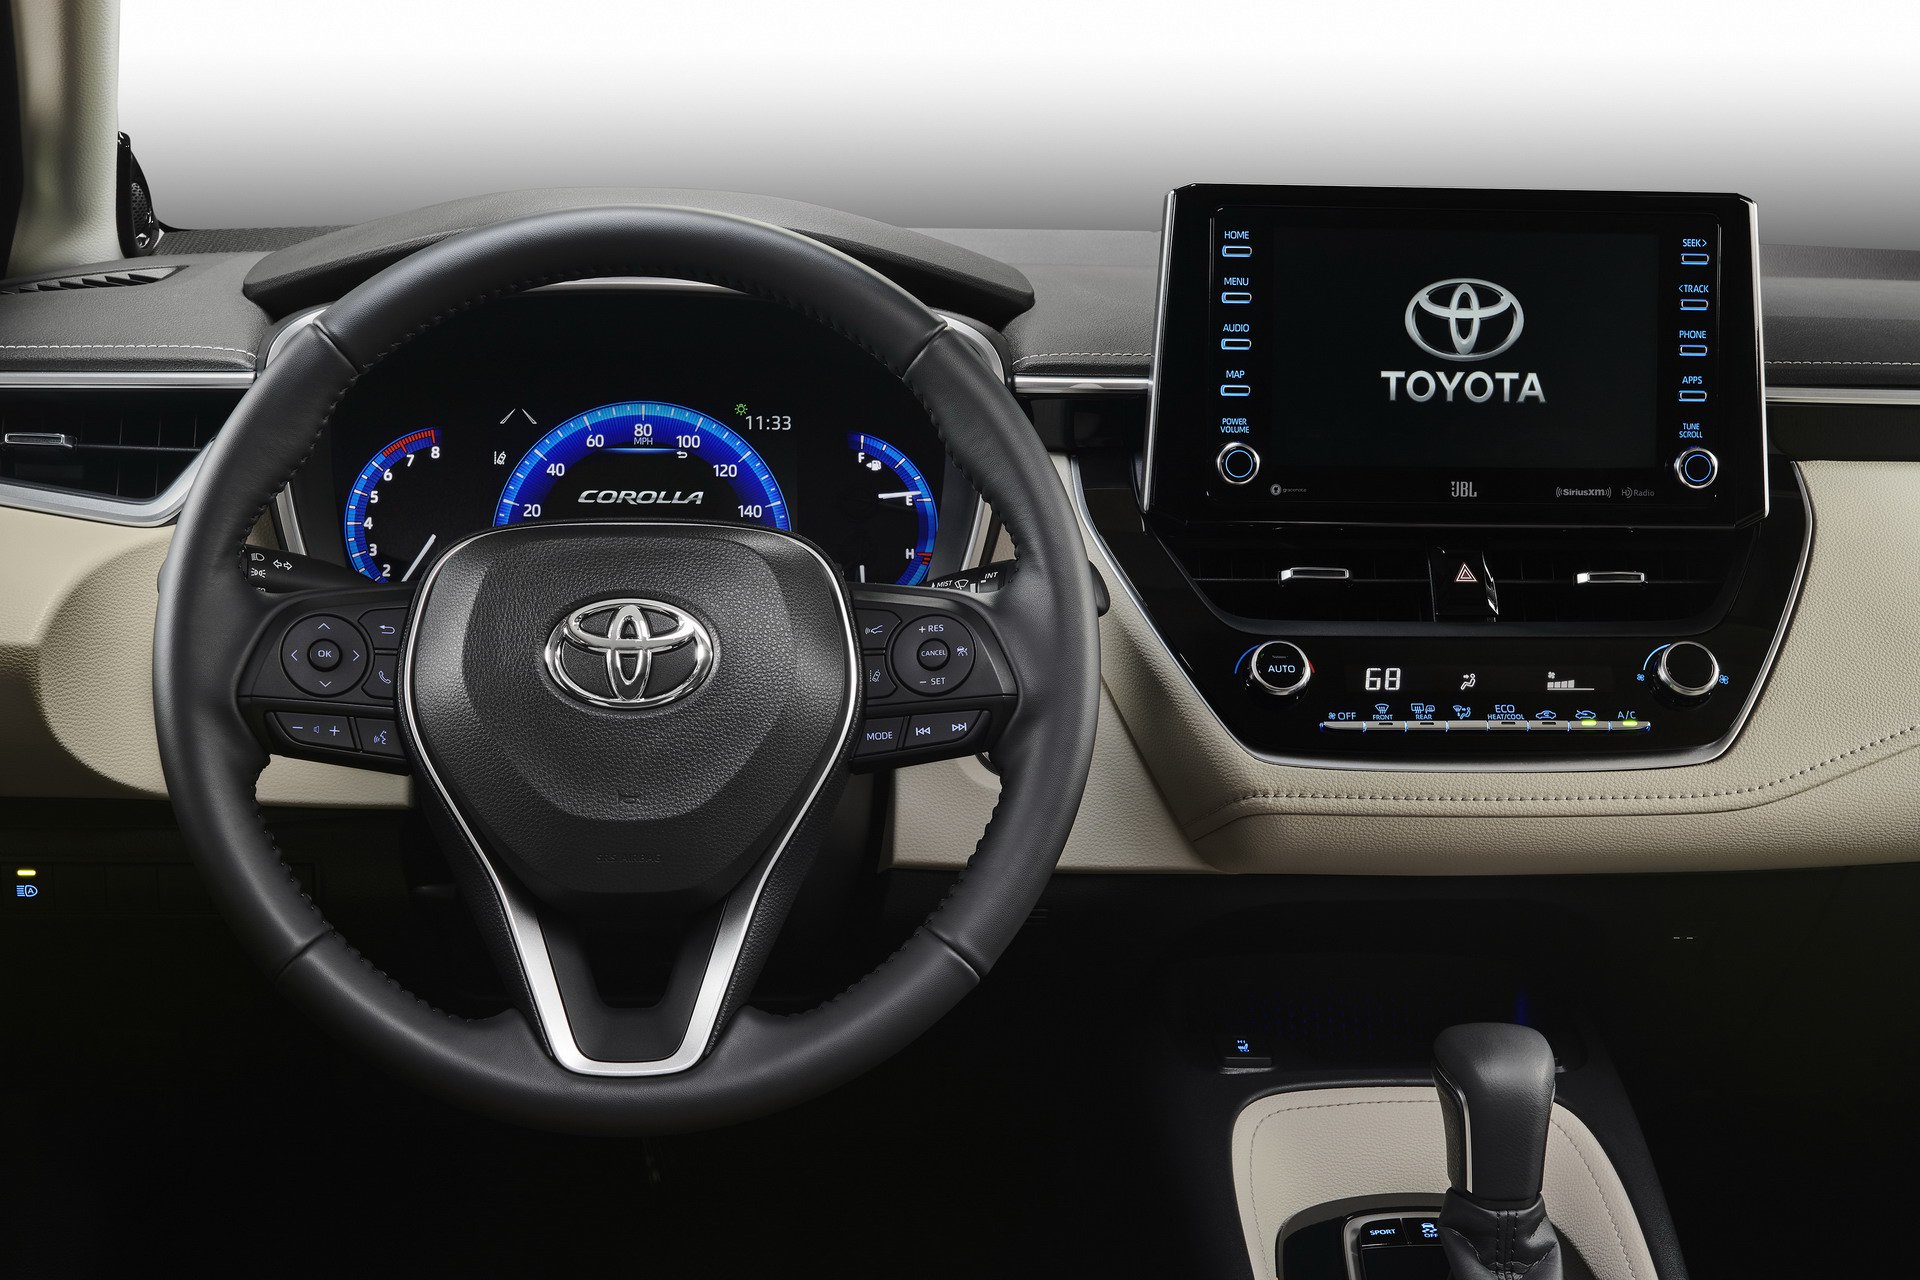 2020 Toyota Corolla Sedan Debuts With New Sporty Look Autoevolution ...